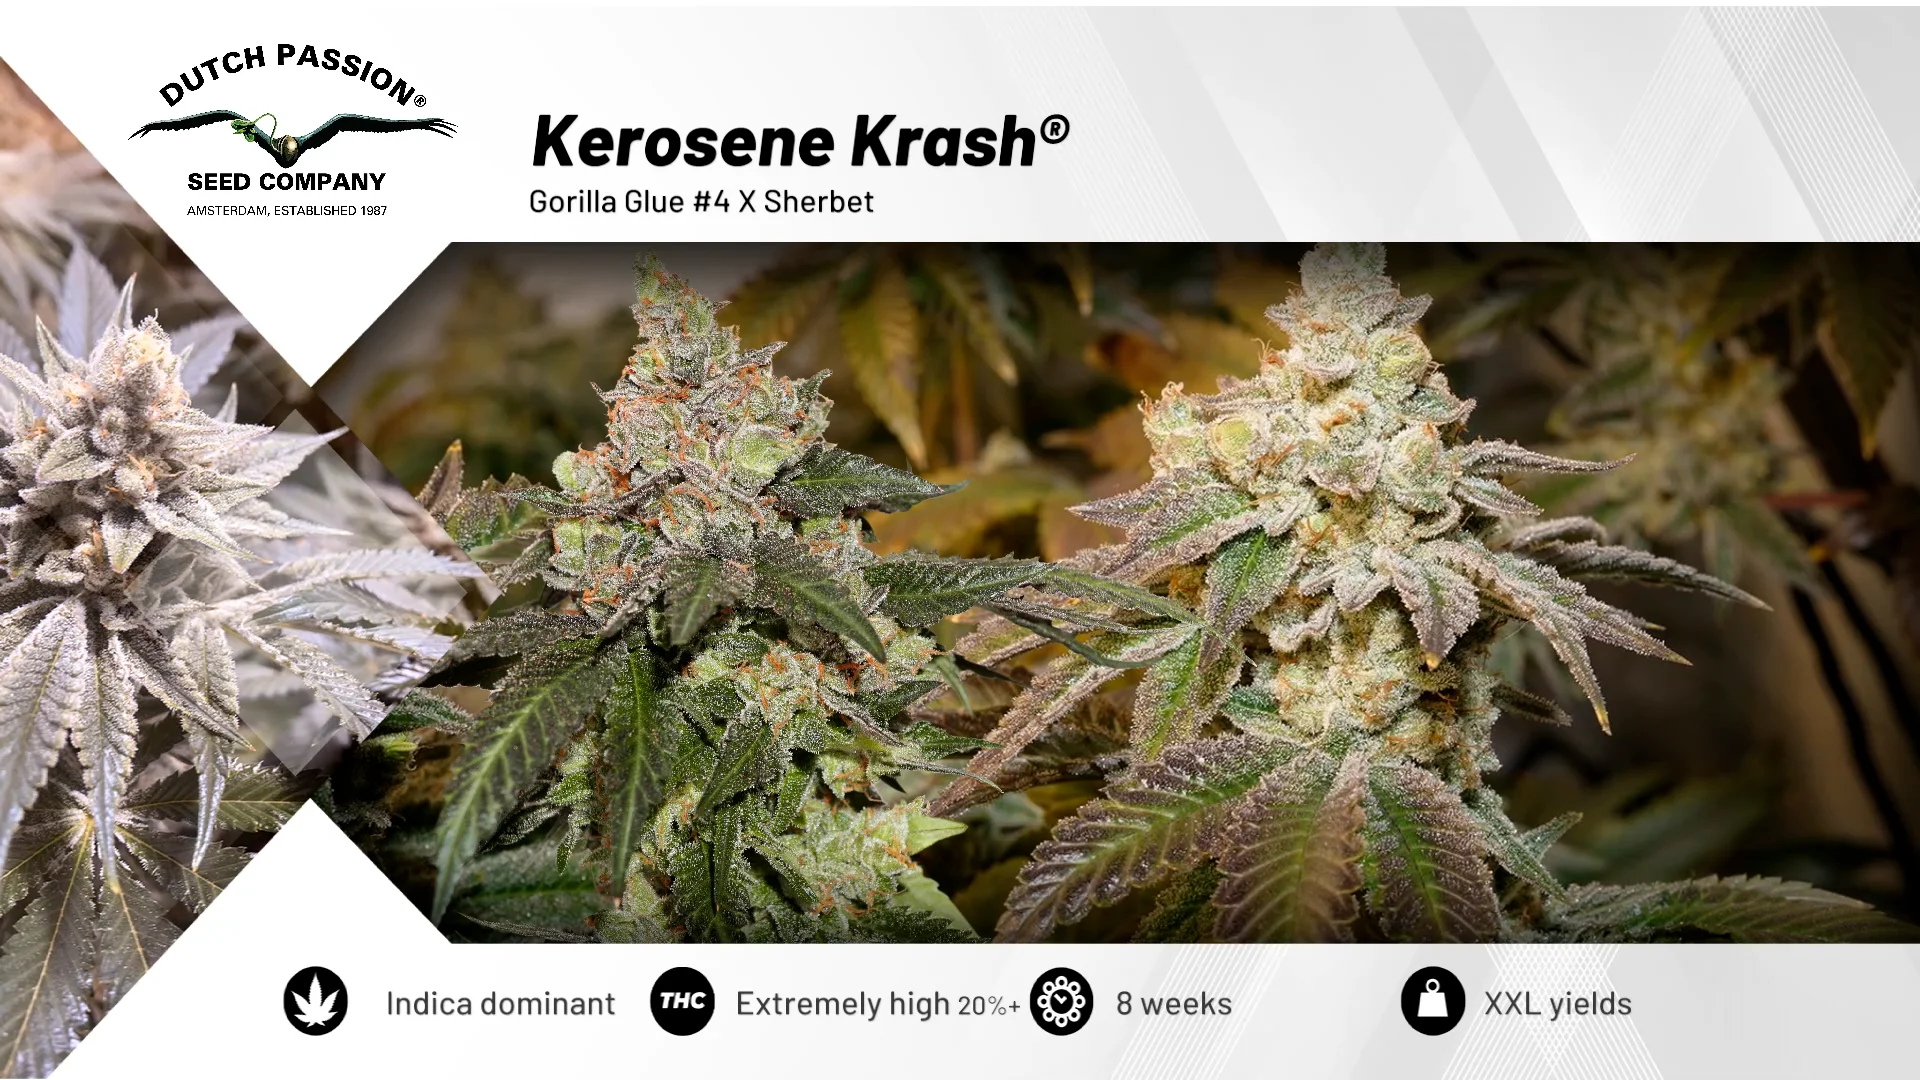 Kerosene Krash® on Vimeo